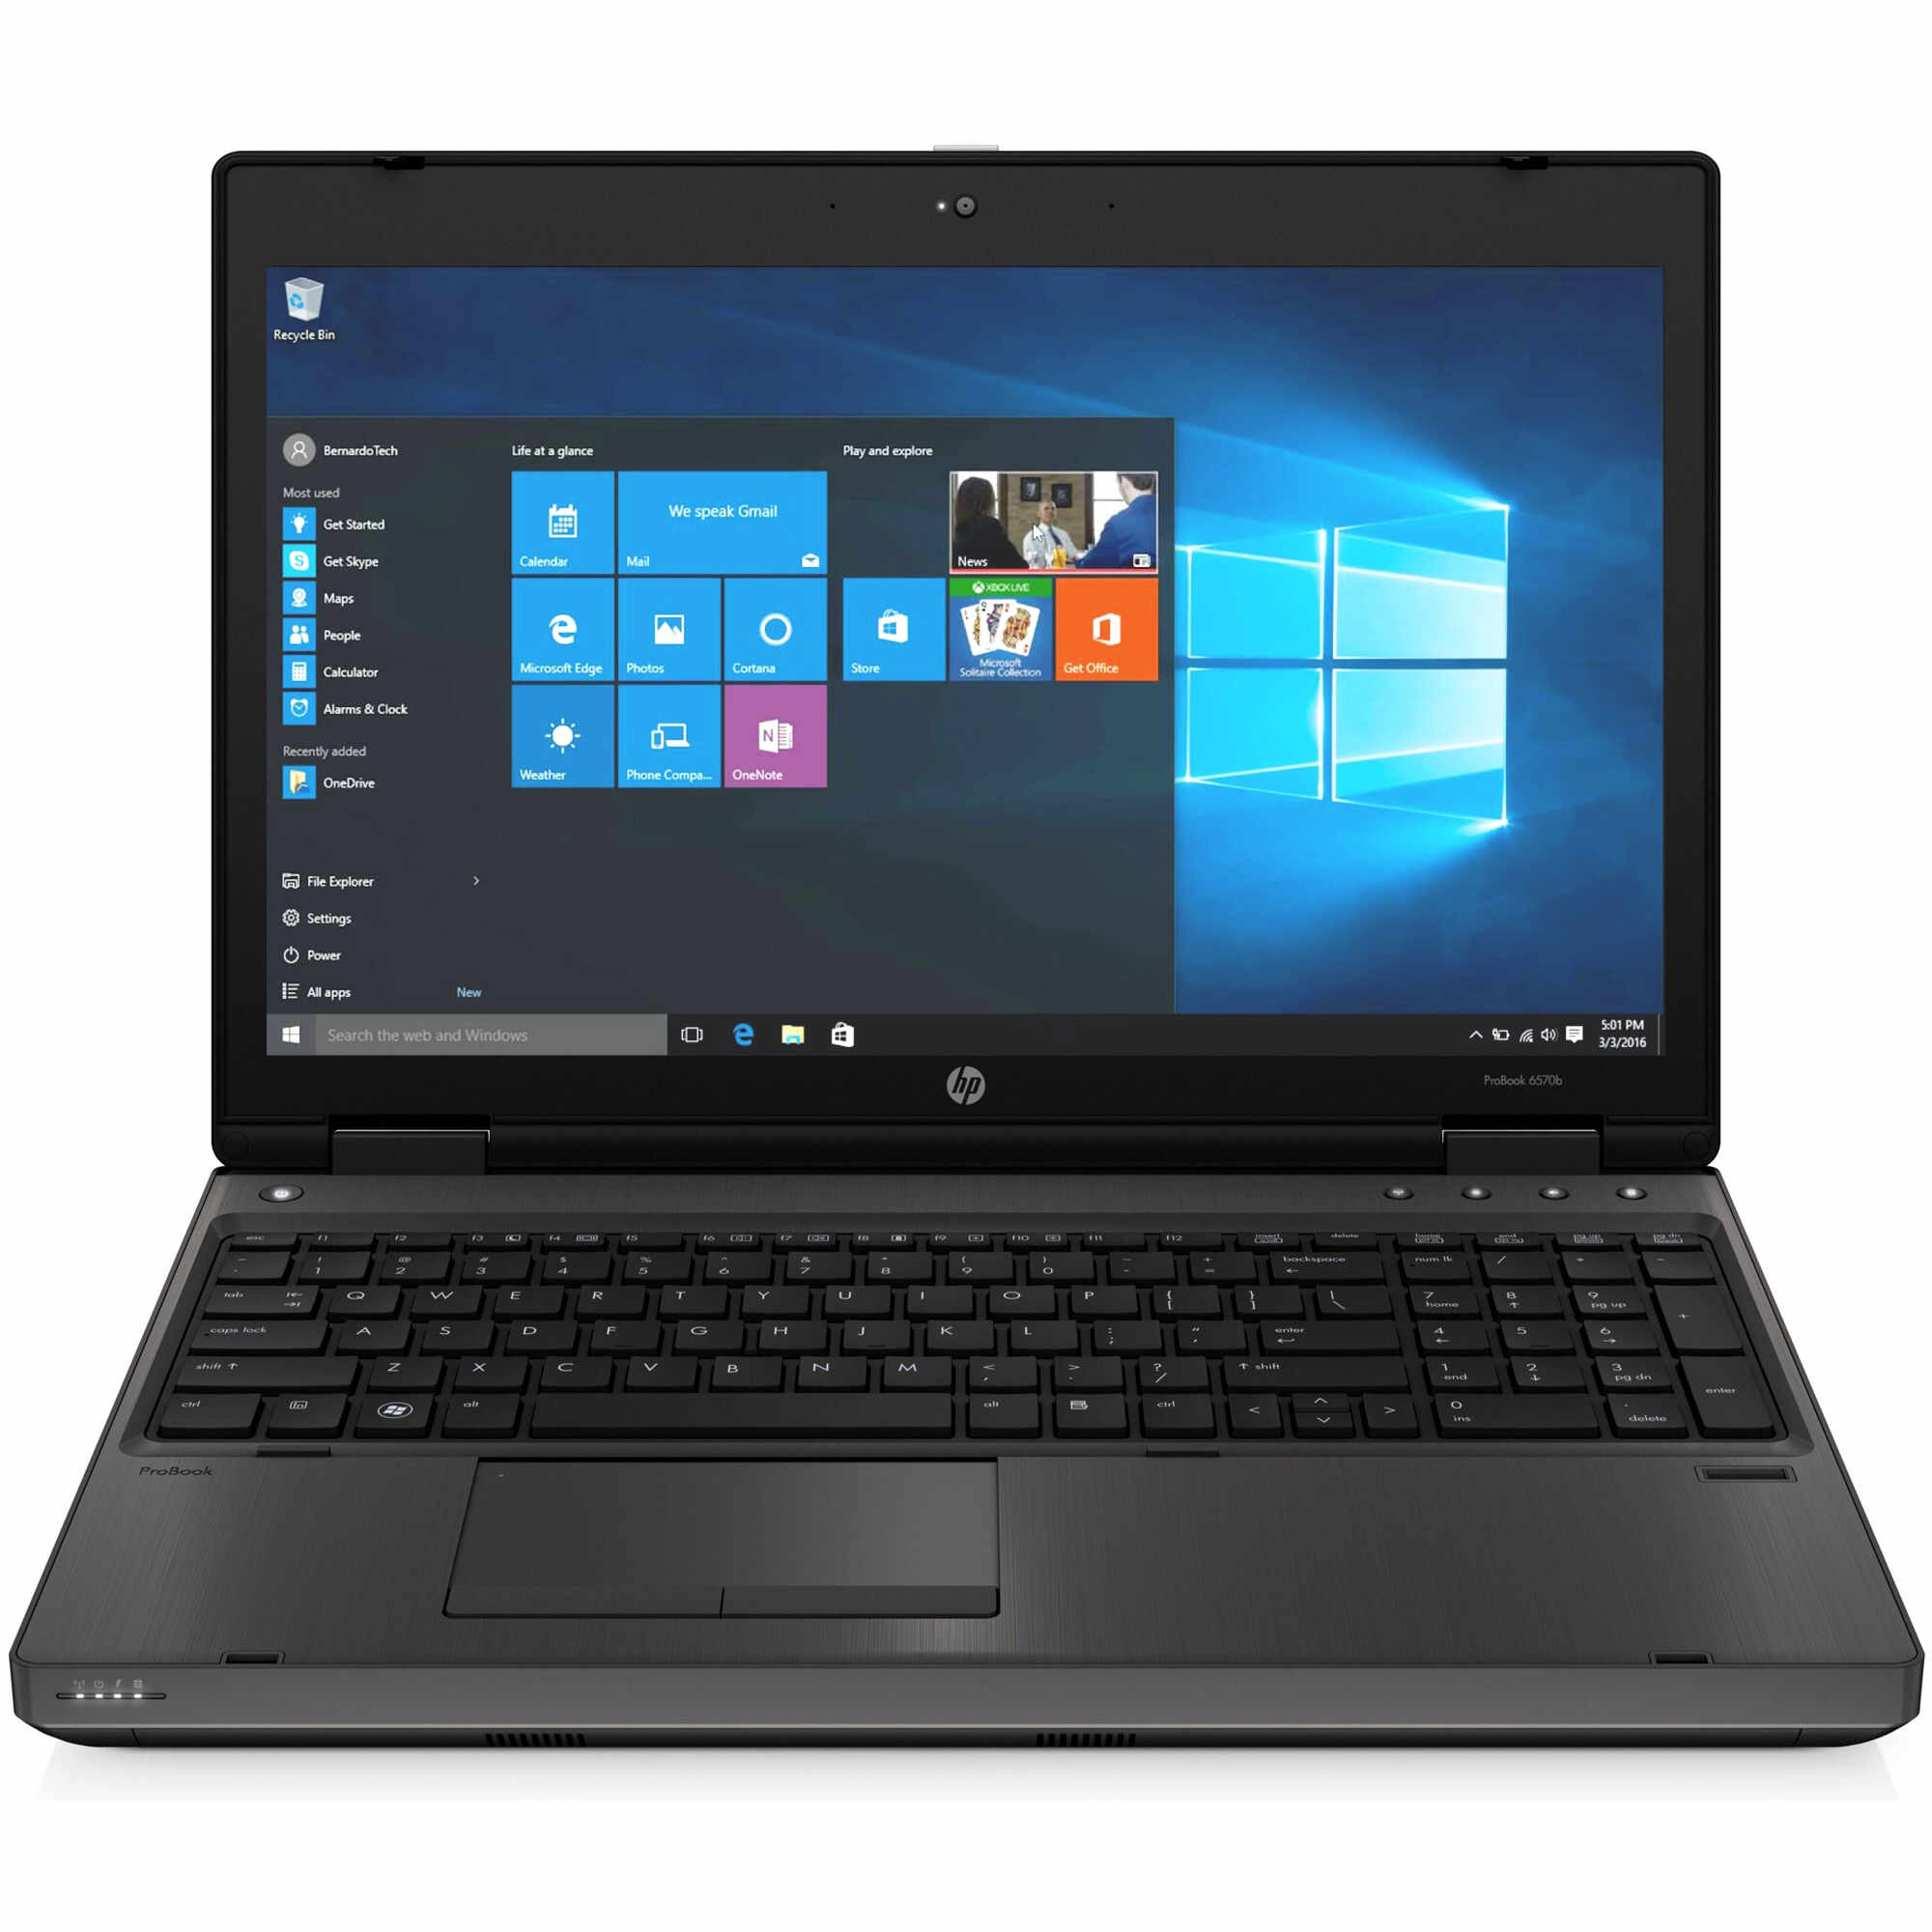 Laptop HP 6570b, Intel Core i5-3210M 2.50GHz, 4GB DDR3, 240GB SSD, DVD-RW, 15.6 Inch, Webcam, Tastatura Numerica, Grad B (0314)